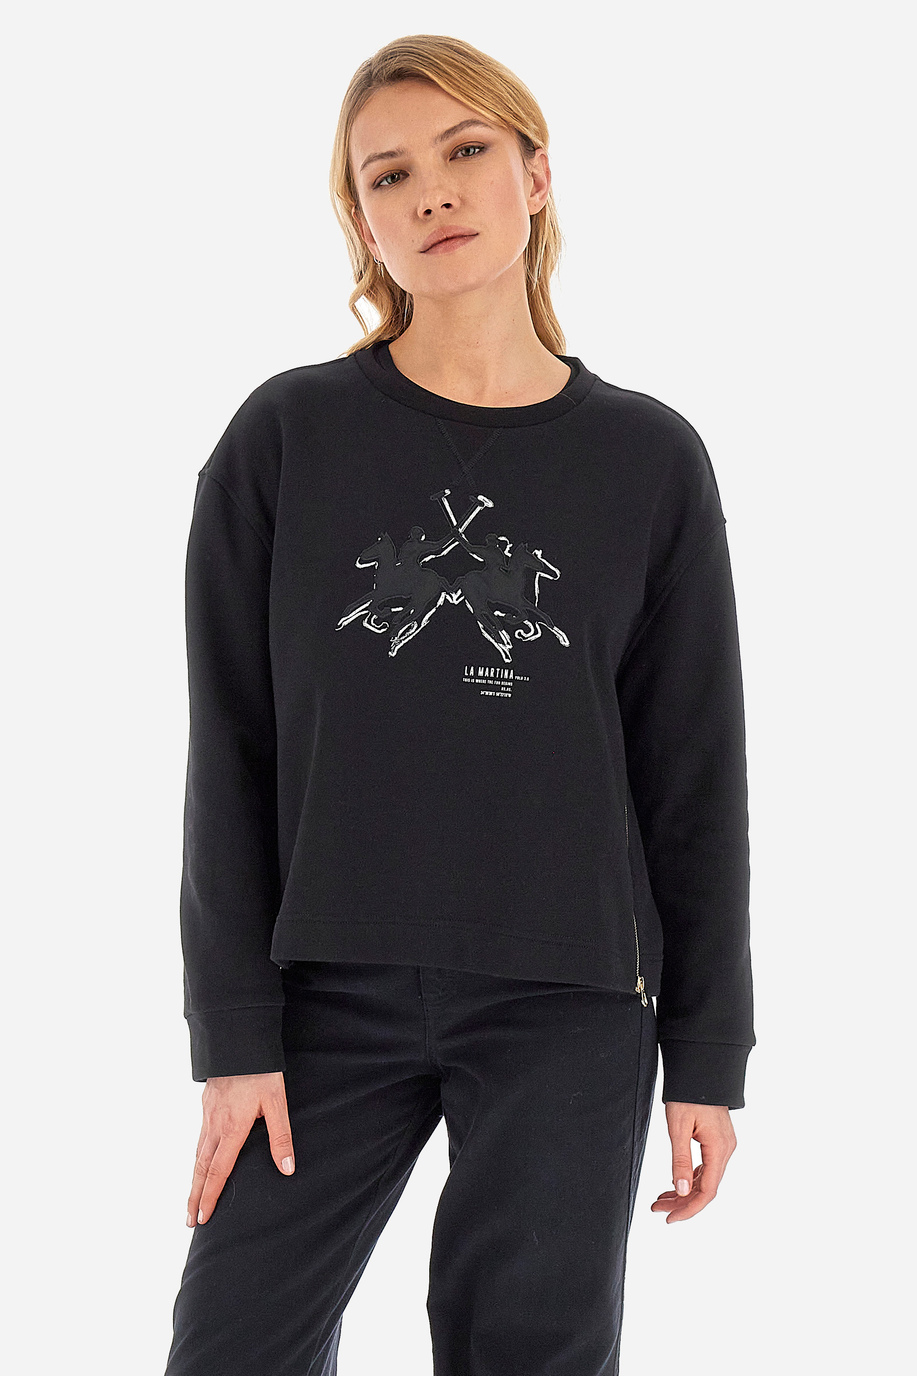 Women's casual and elegant sweatshirts